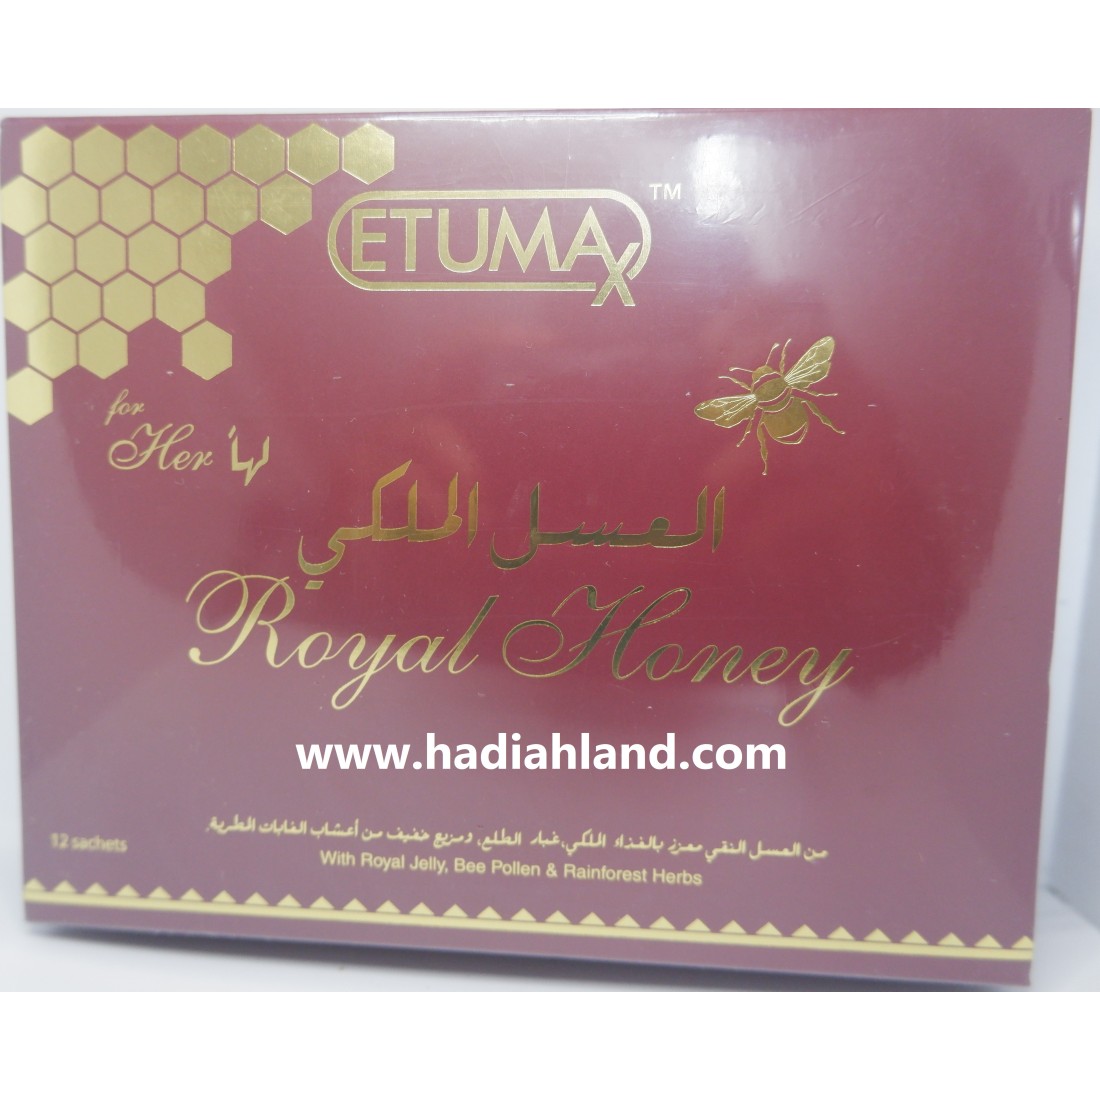 Etumax Royal Honey for her women (20g x 12 sachets) Malaysia Original 2021.